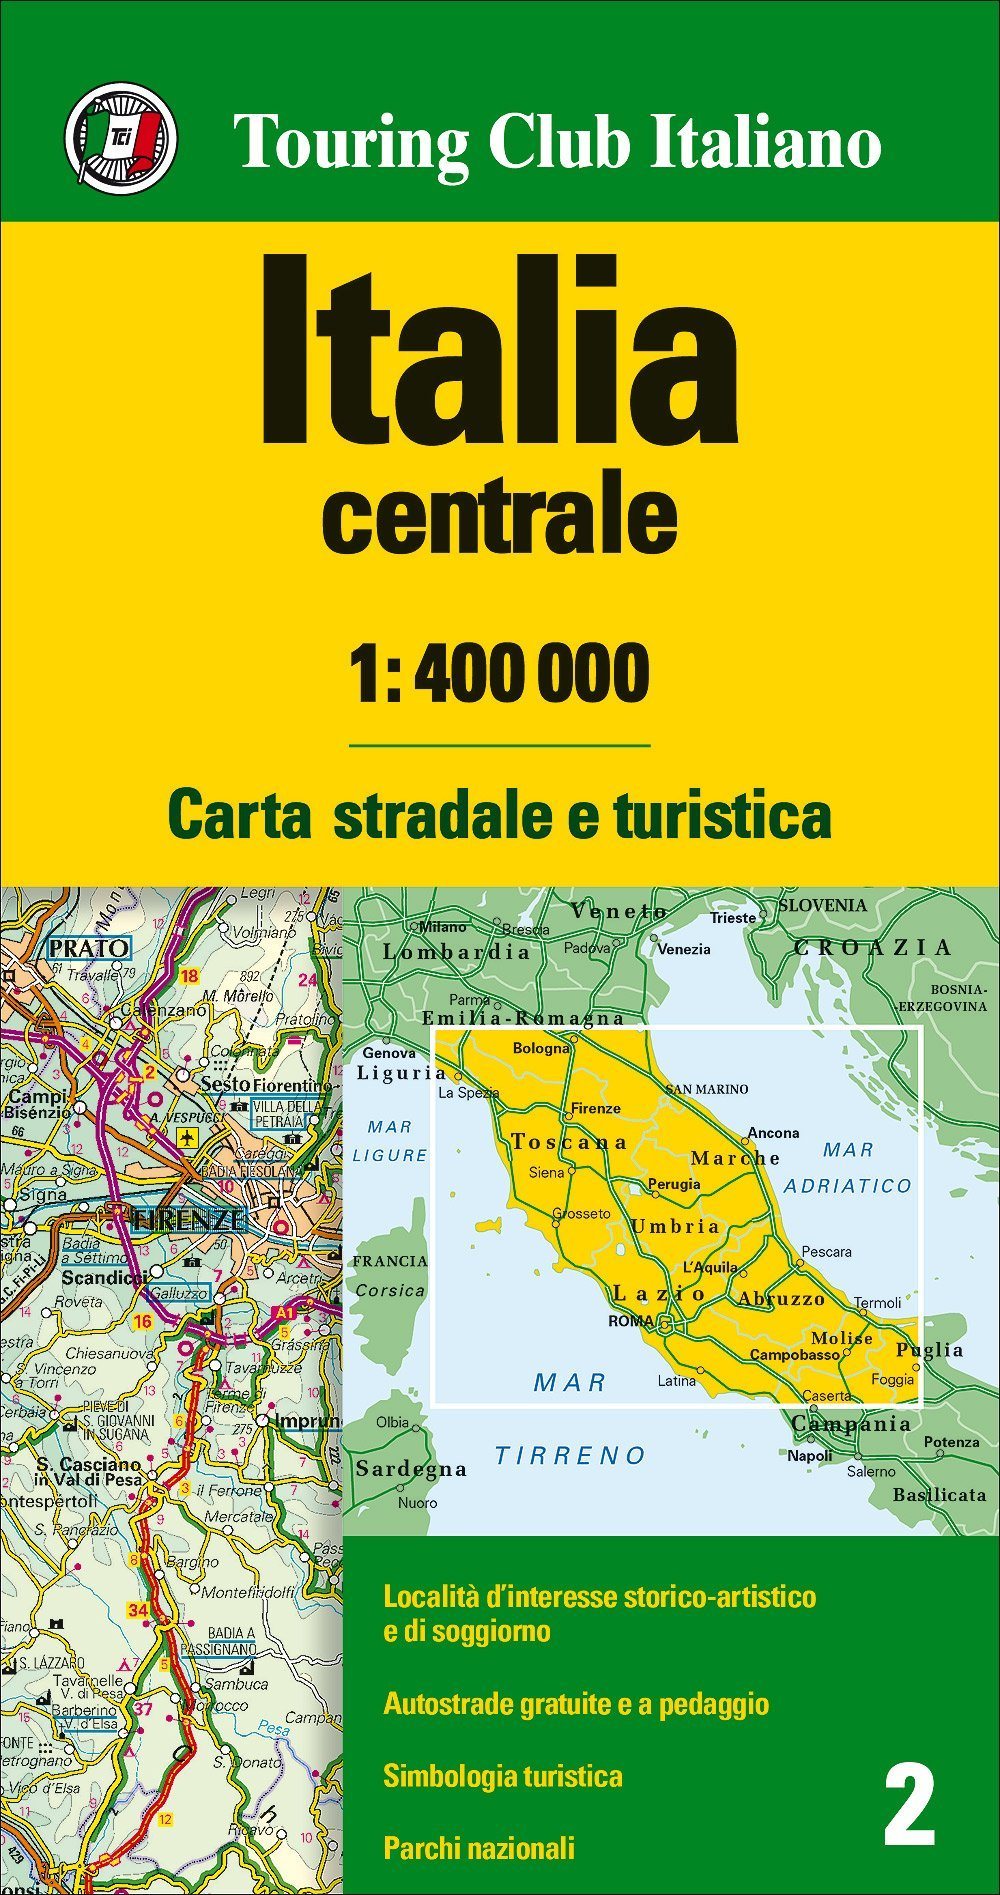 Carte routière n° 2 - Italie centrale | Touring Club Italiano-1/400 000 carte pliée Touring 